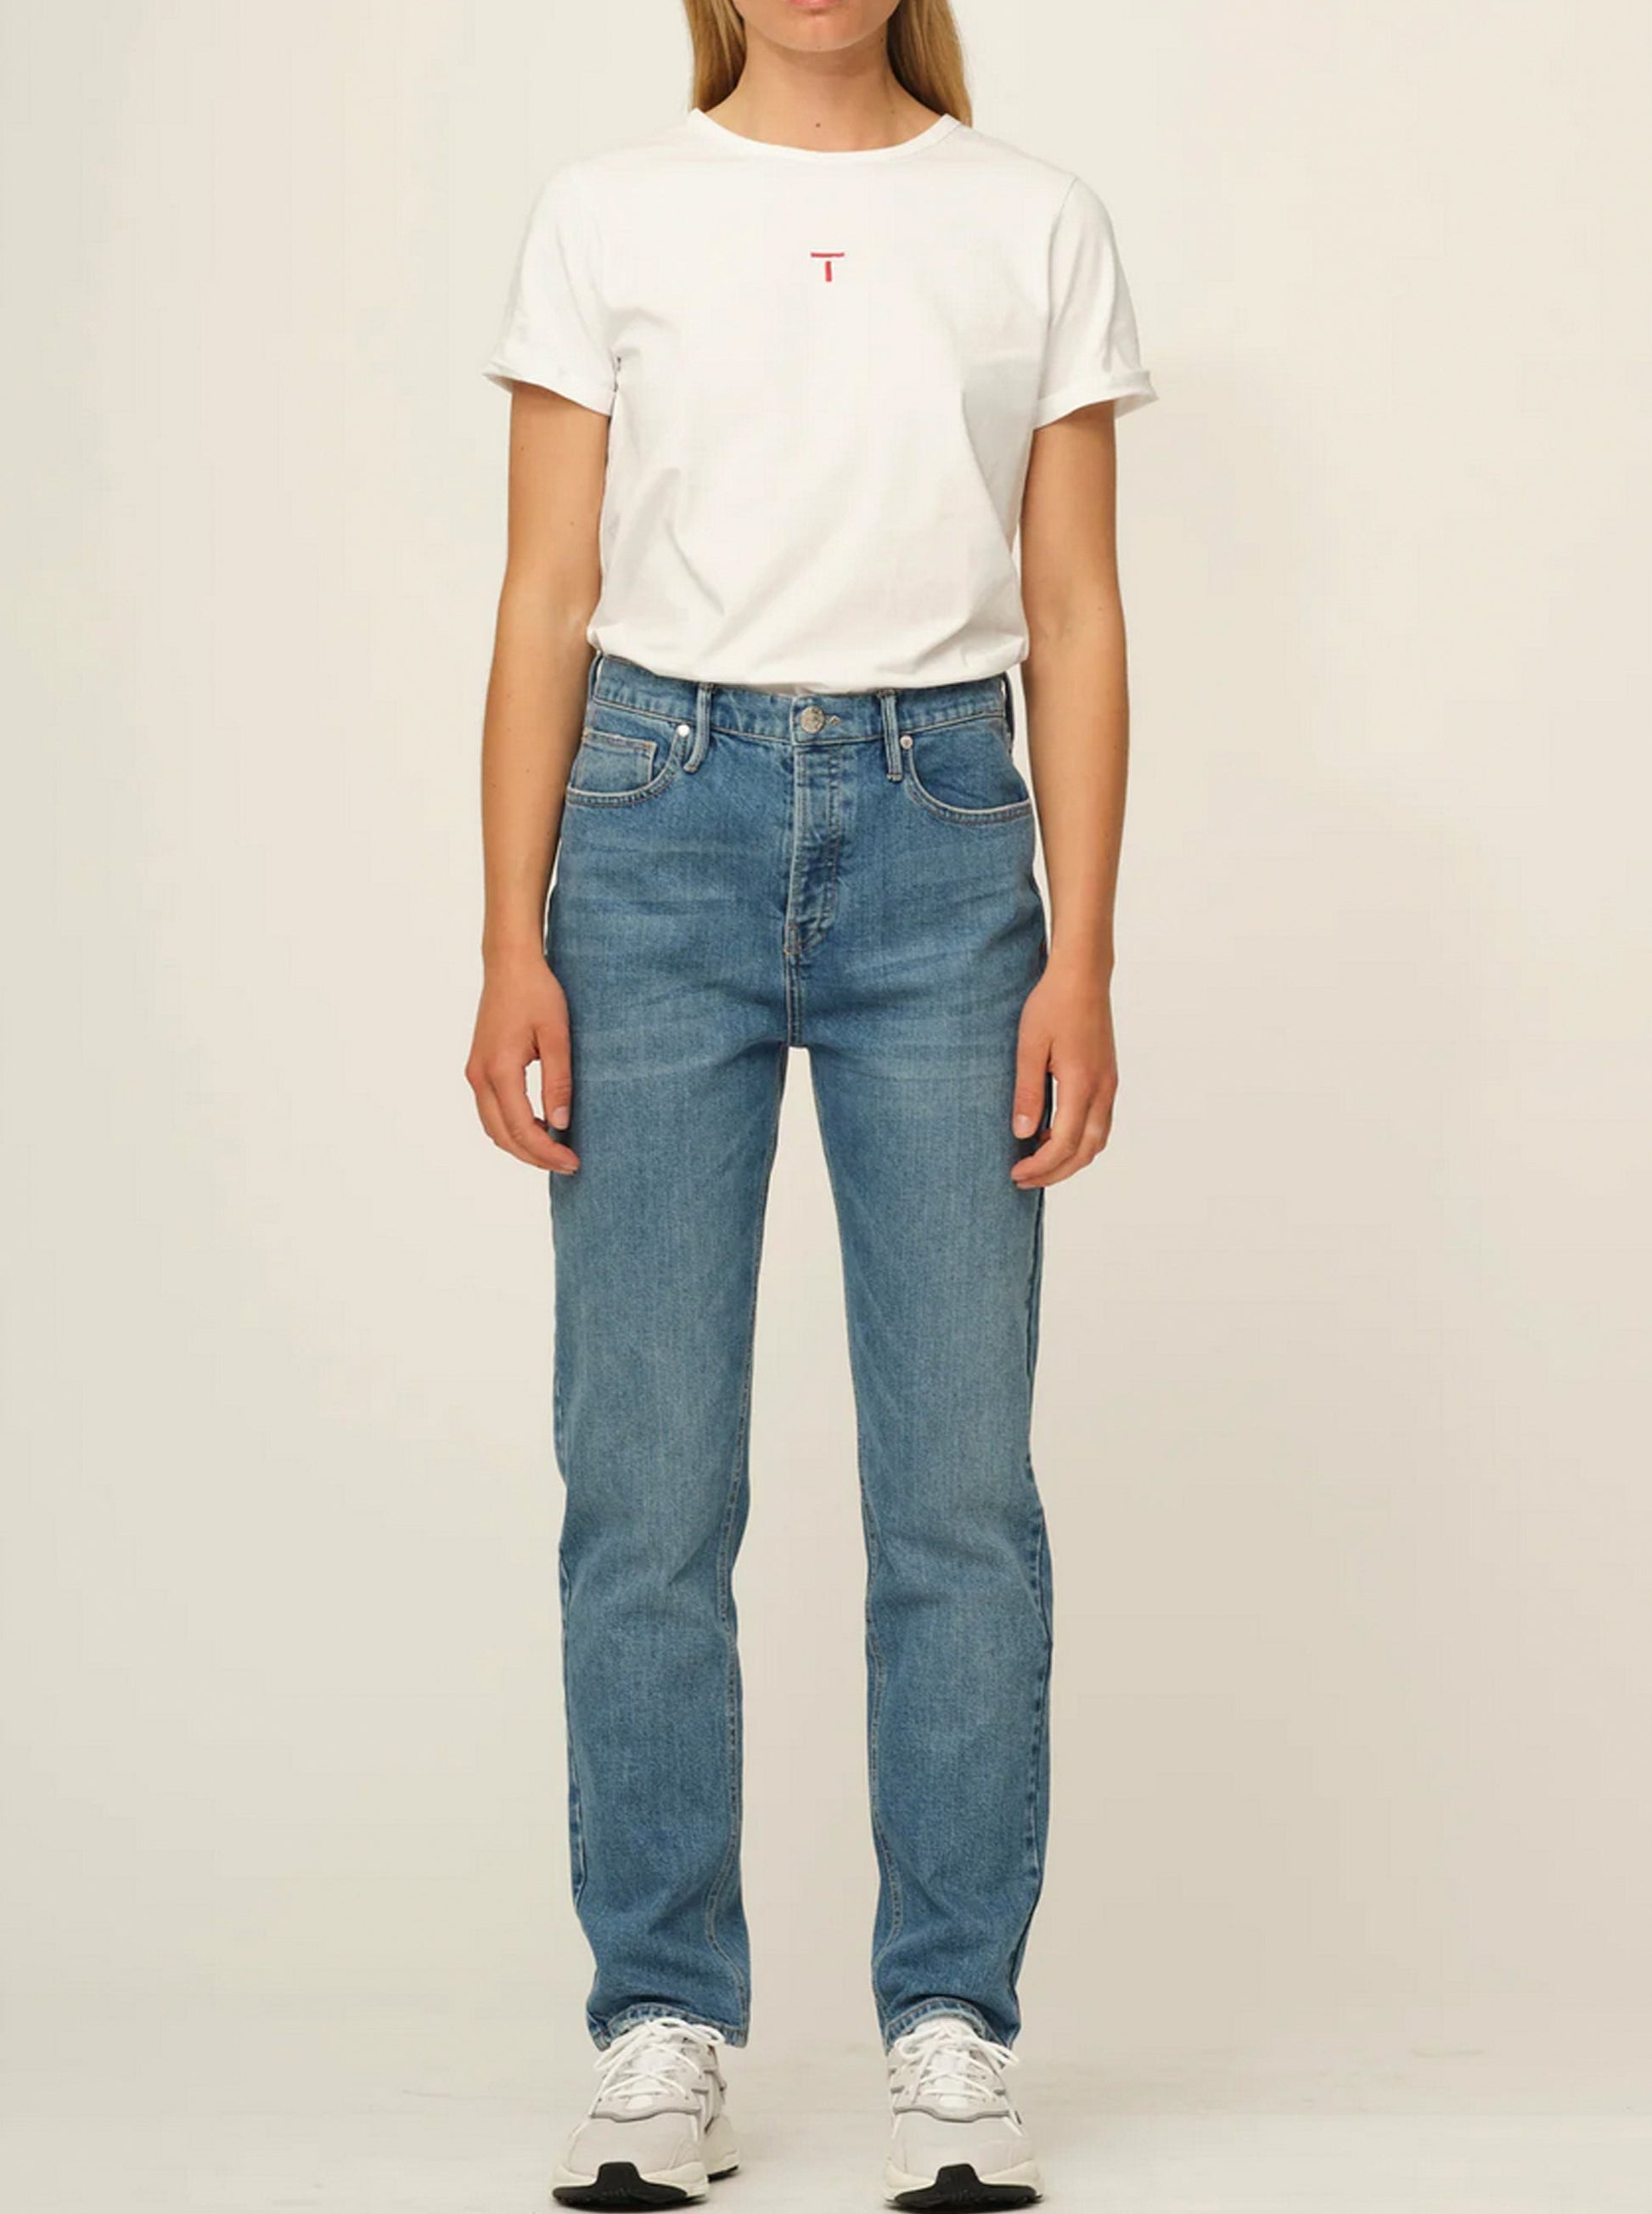 A woman wearing Teresa Jeans - Hong Kong high waist jeans and a white t-shirt.